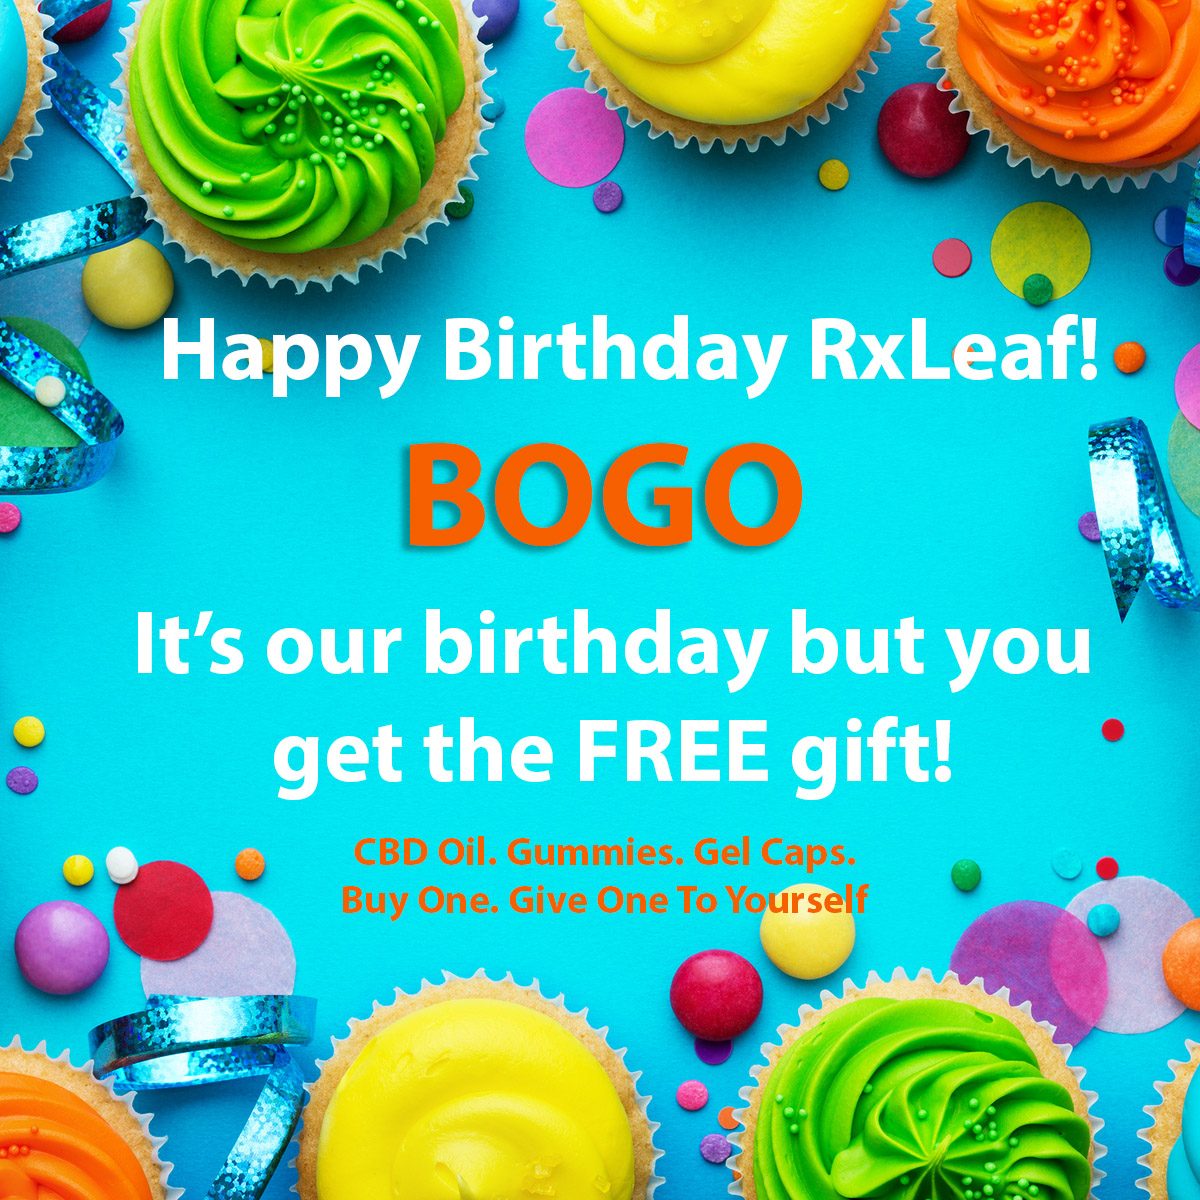 Birthday BOGO ad with cupcakes